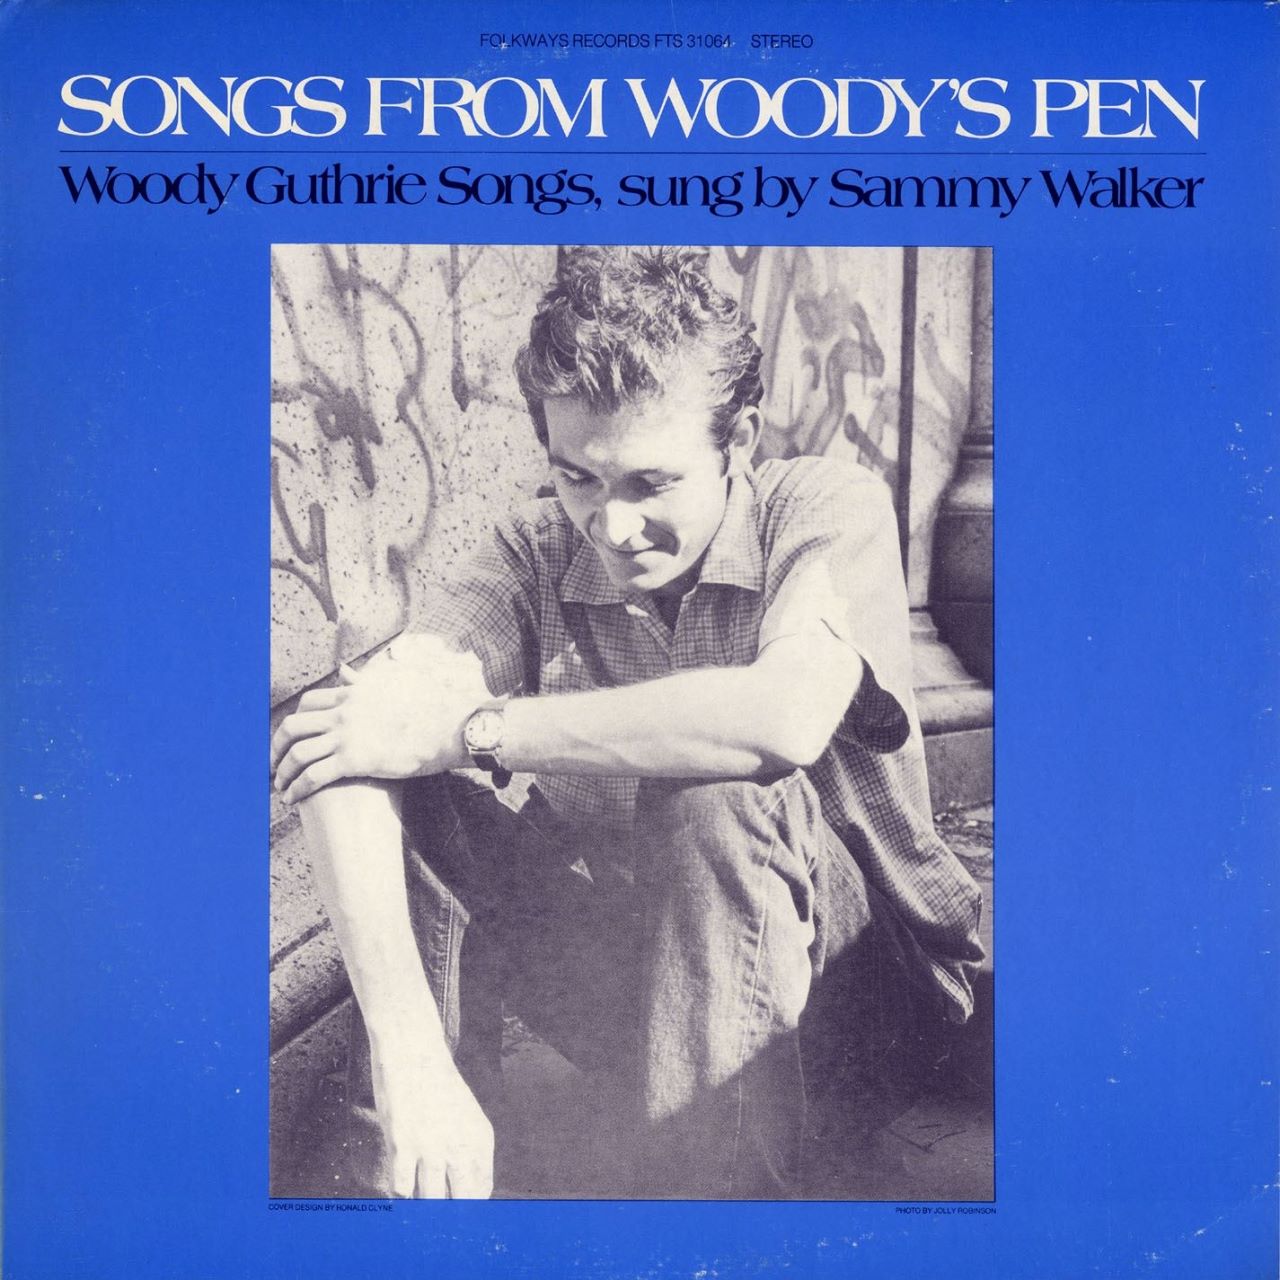 Sammy Walker - Songs From Woody's Pen cover album